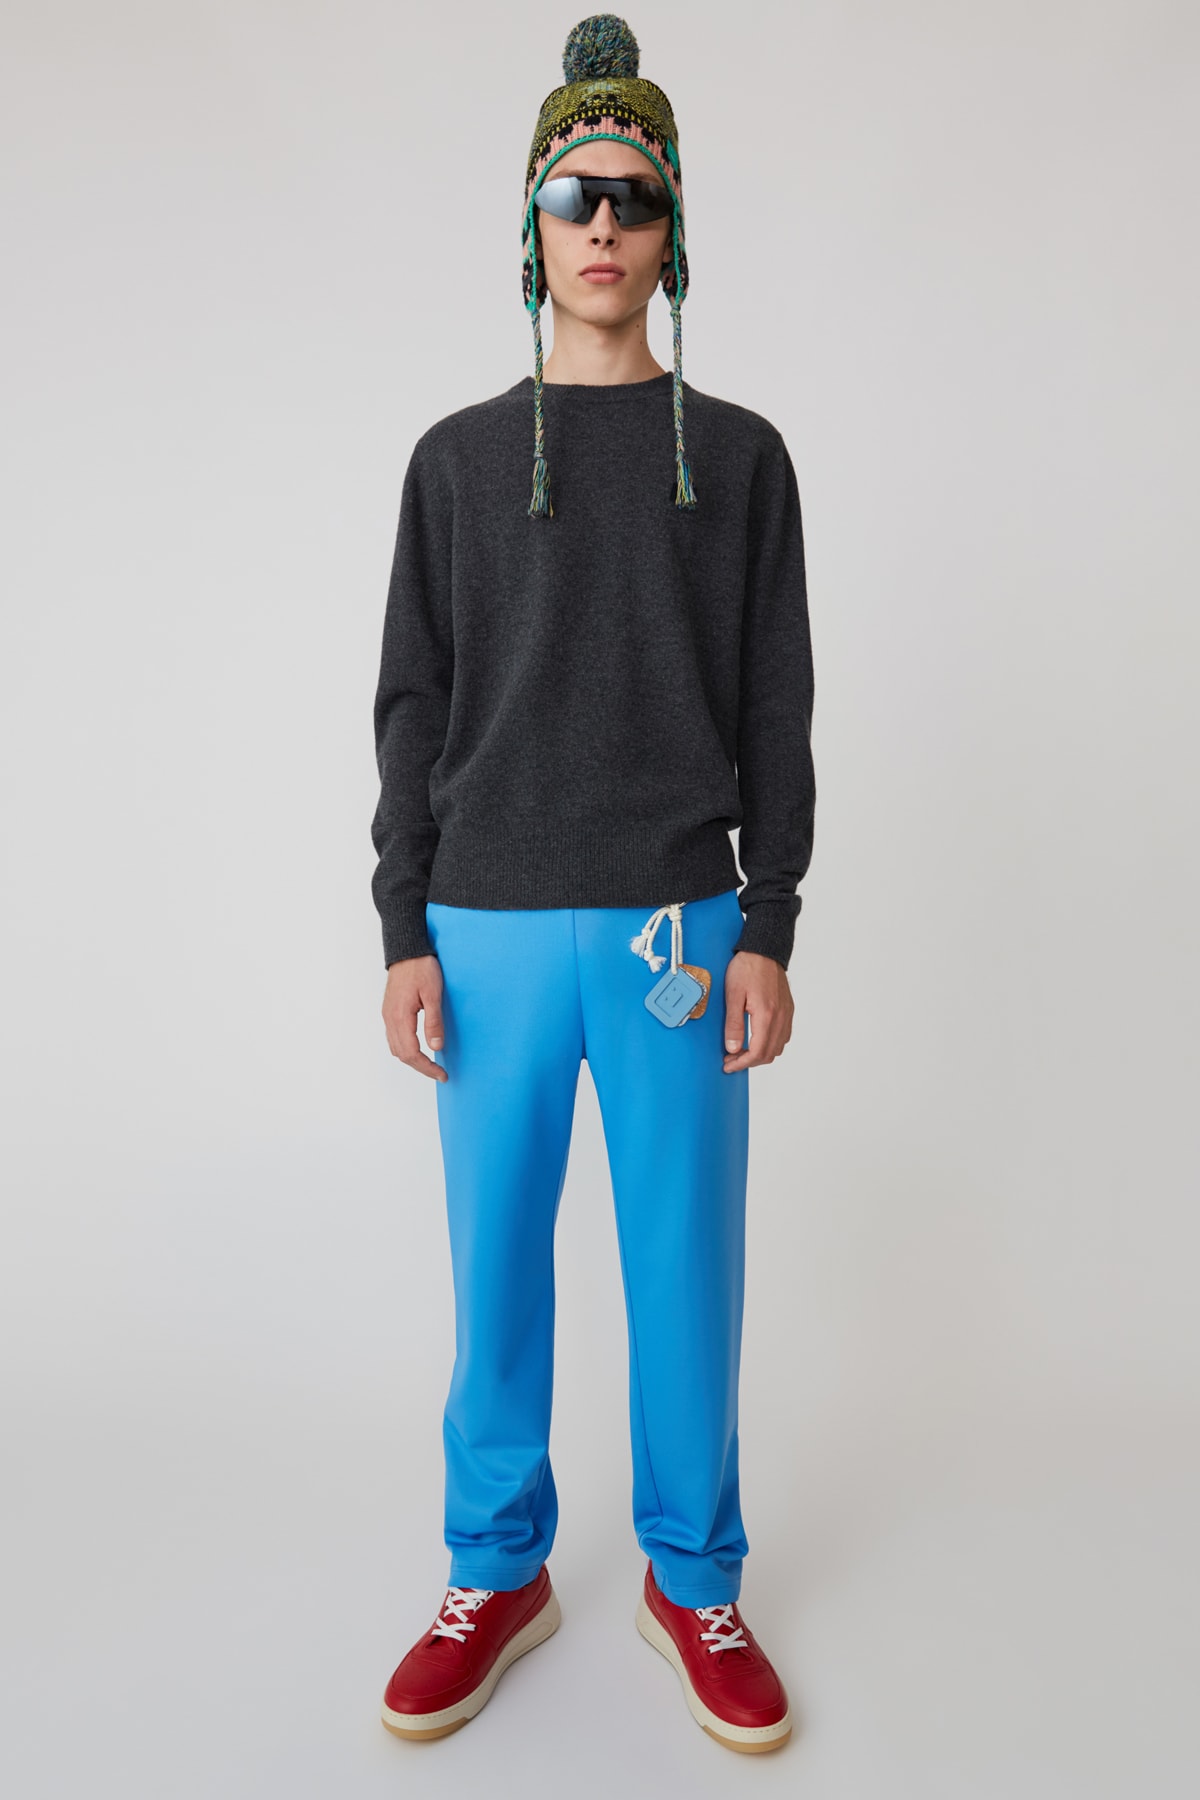 Acne Studios Spring/Summer 2019 Face Collection Sweatshirt Black Pants Blue